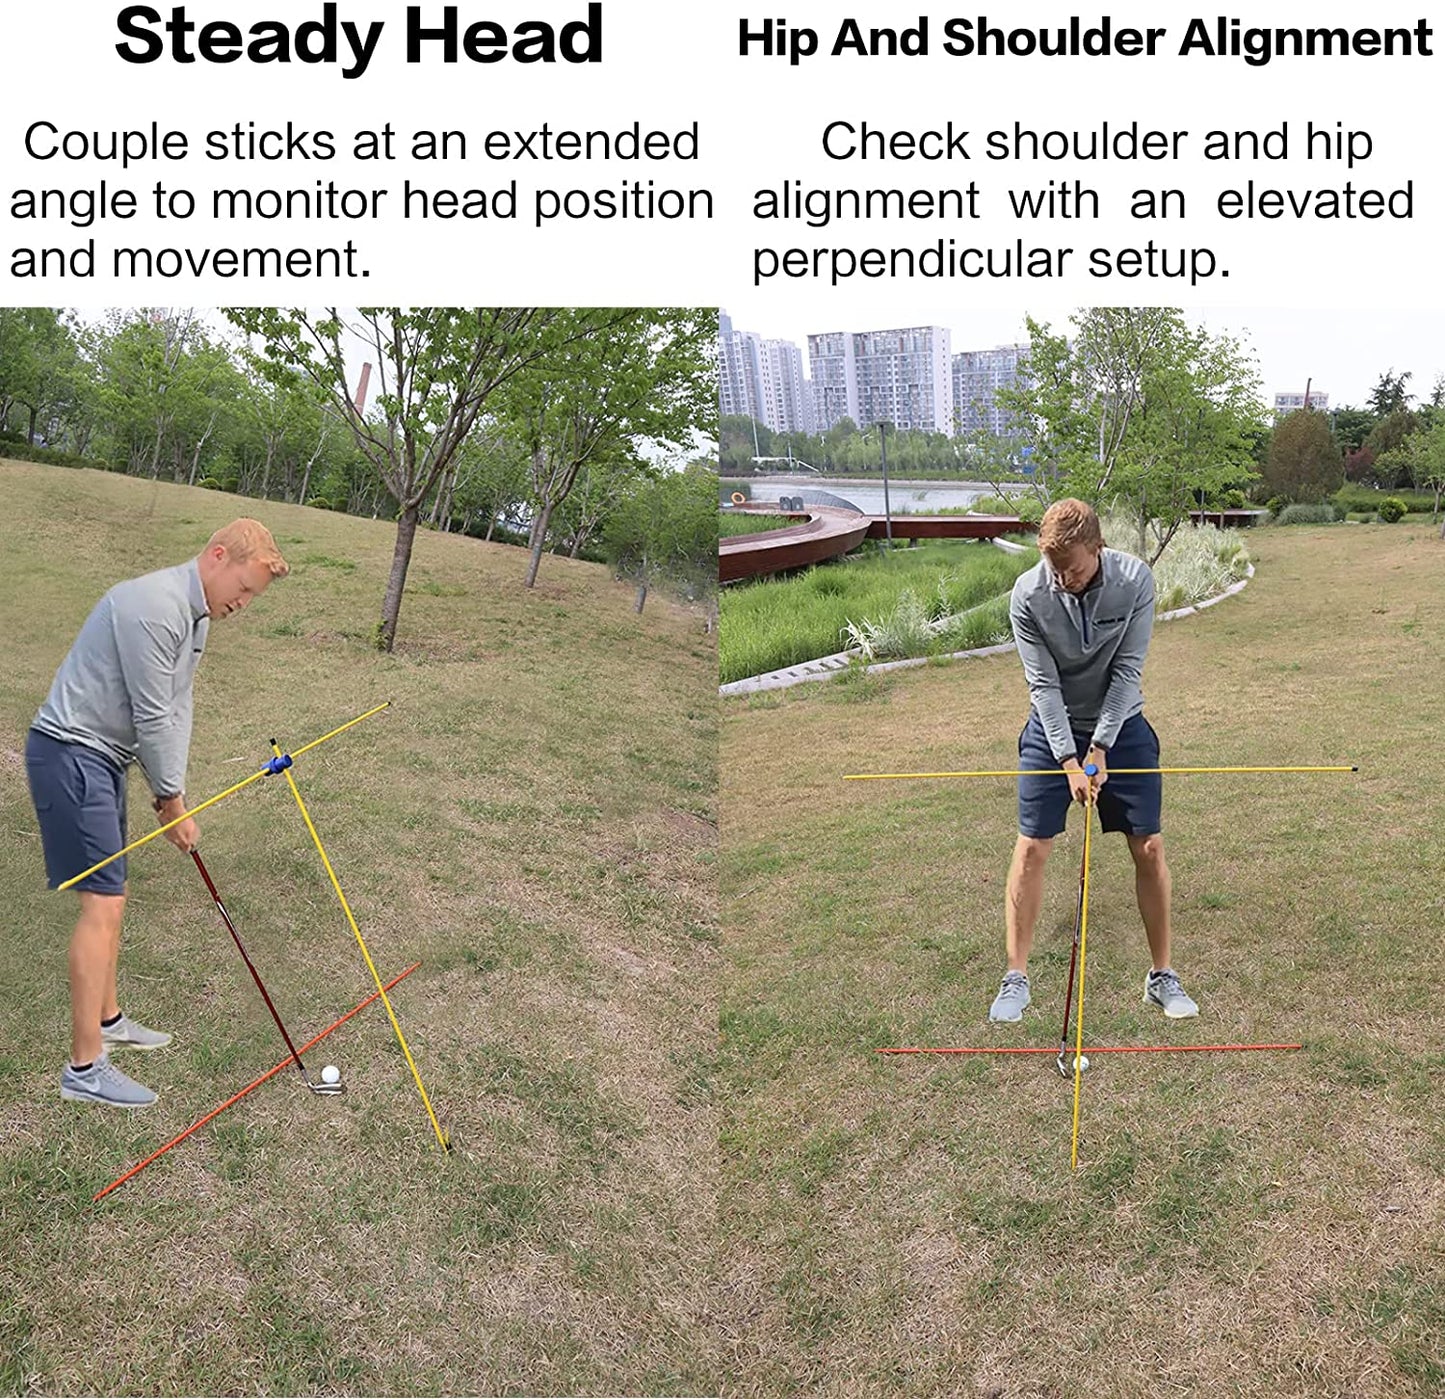 Golf Alignment Sticks Rods Swing Trainer Tools